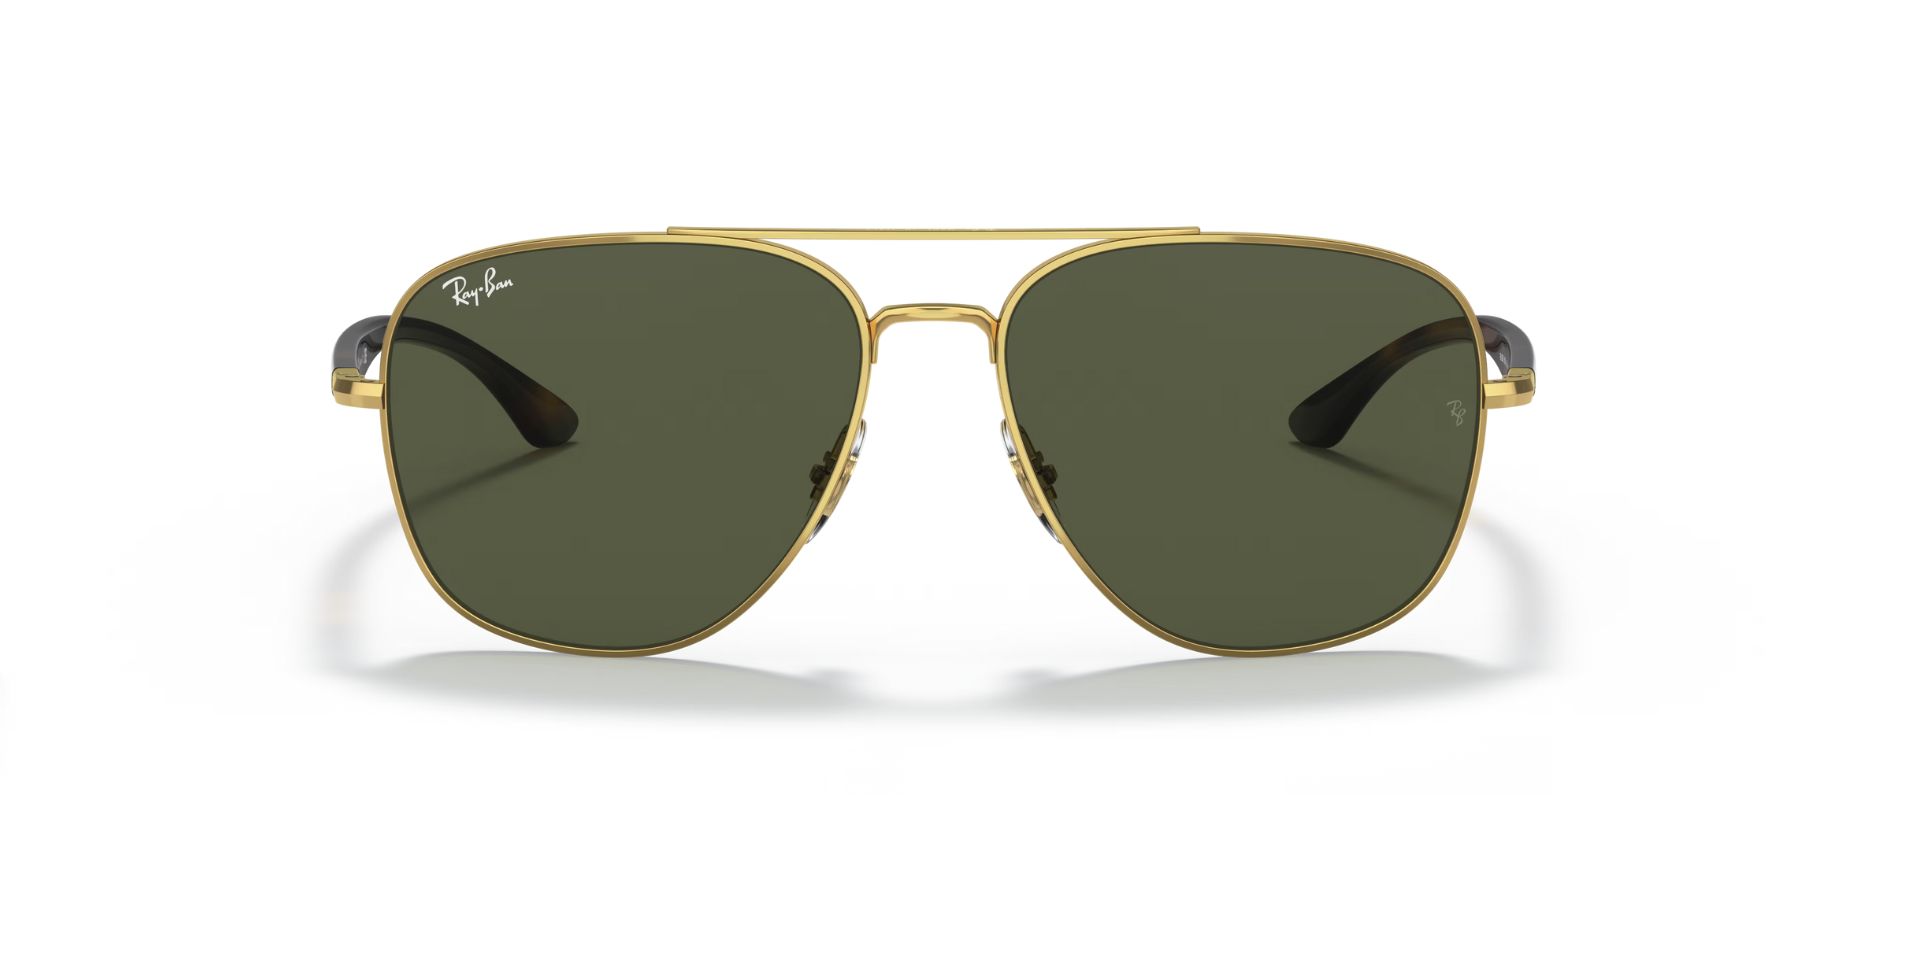 RB3683, rayban best seller sunglasses, rayban dubai, optical shop dubai, G-15 rayban